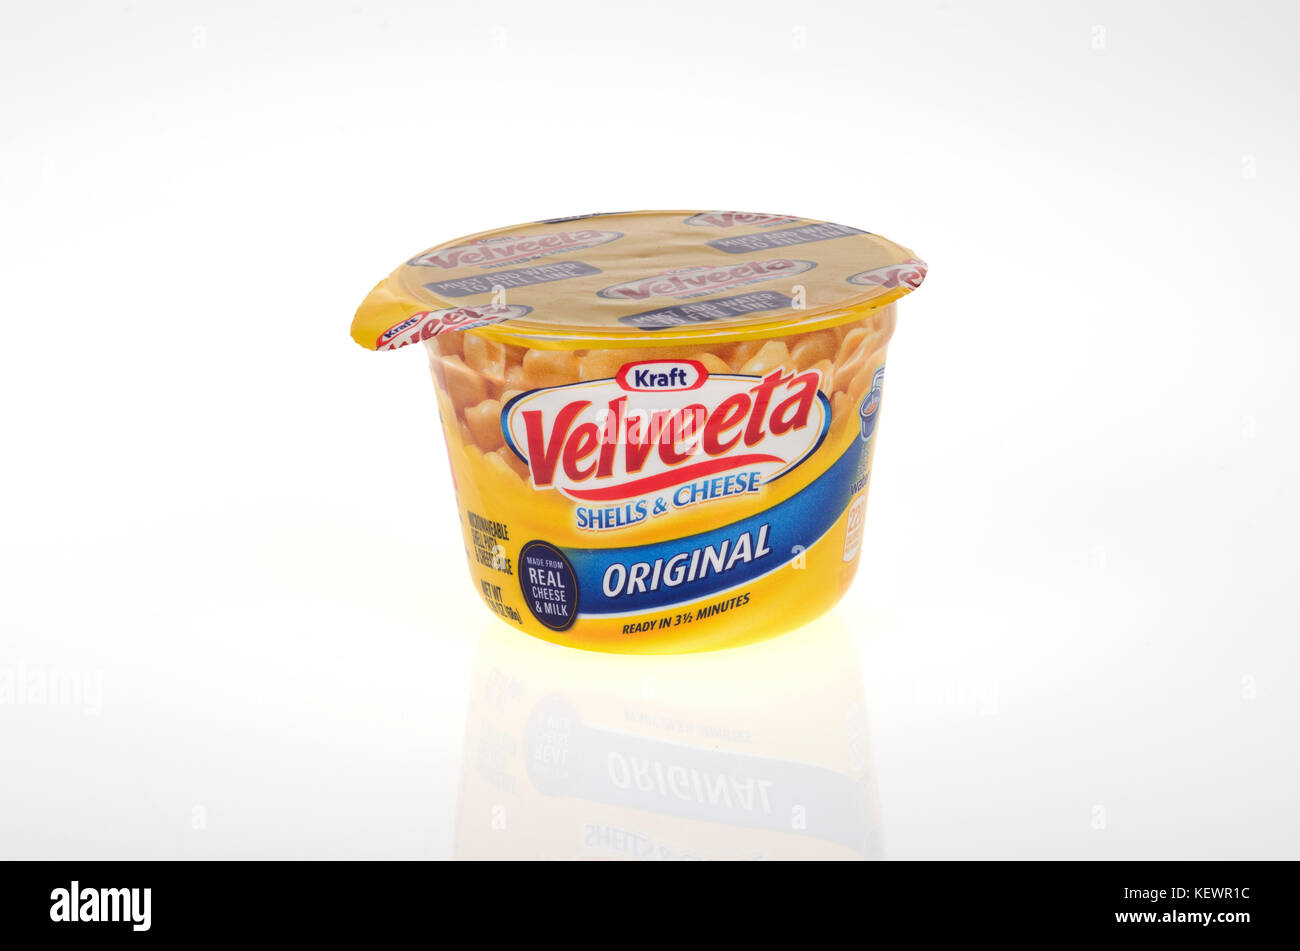 Unopened Tub of Velveeta shells & cheese by Kraft on white background, cutout USA Stock Photo